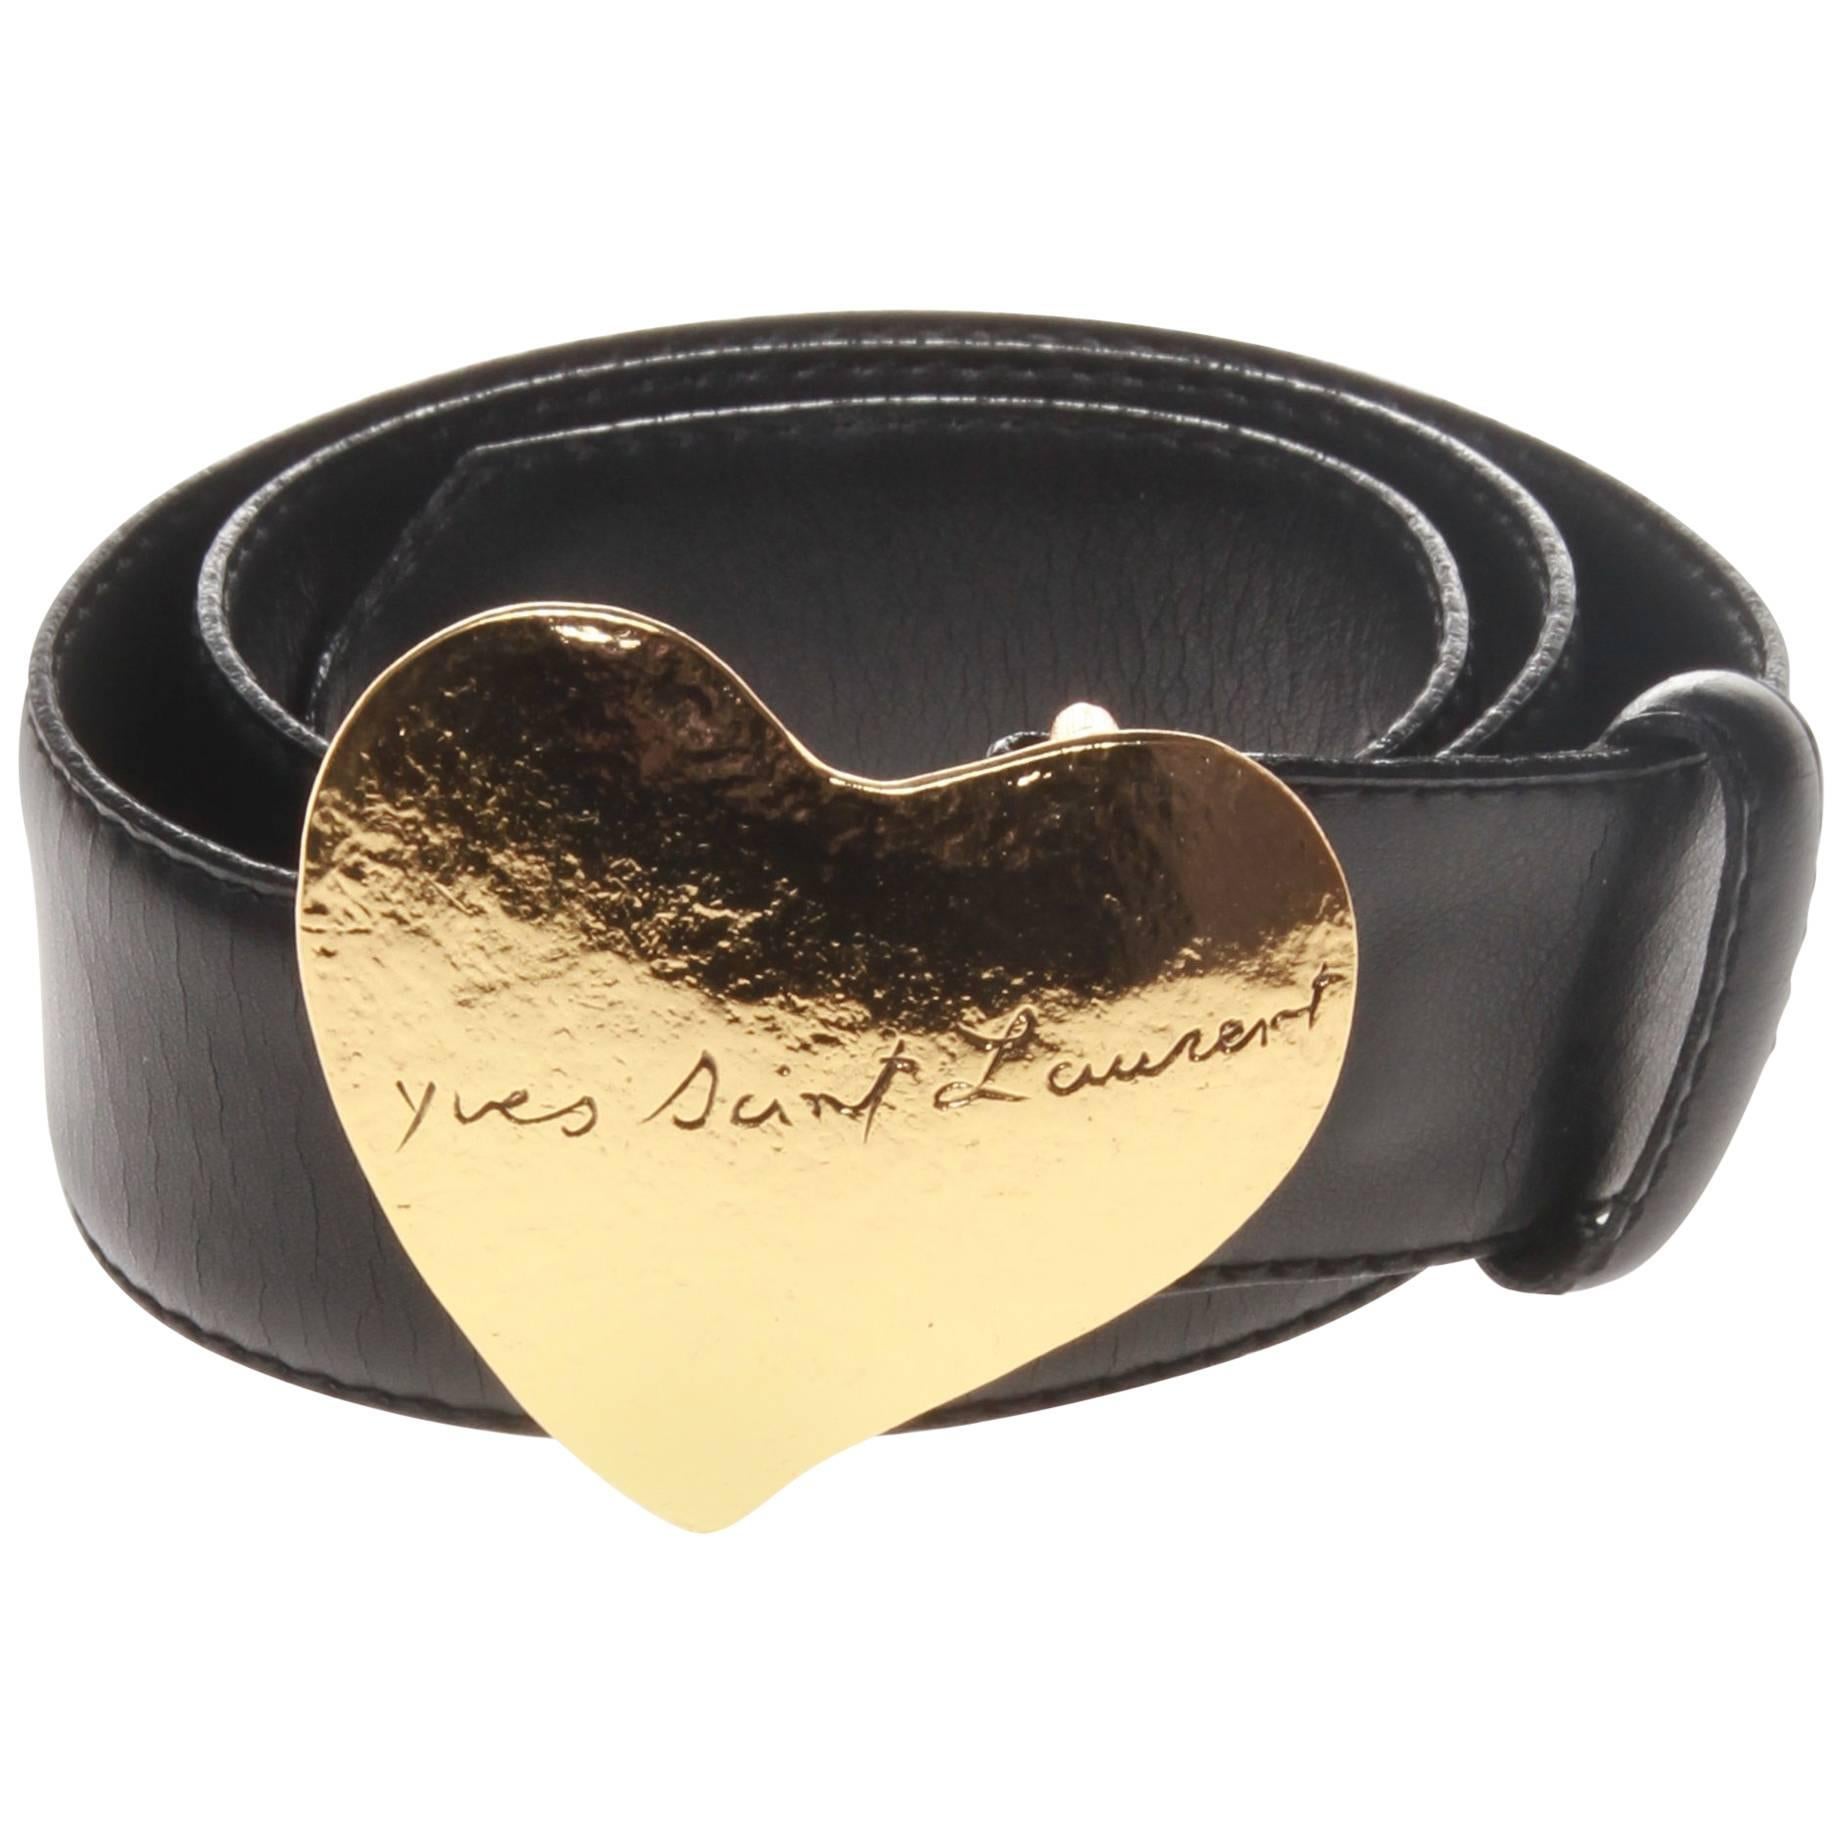 	Yves saint laurent black leather belt with heart buckle